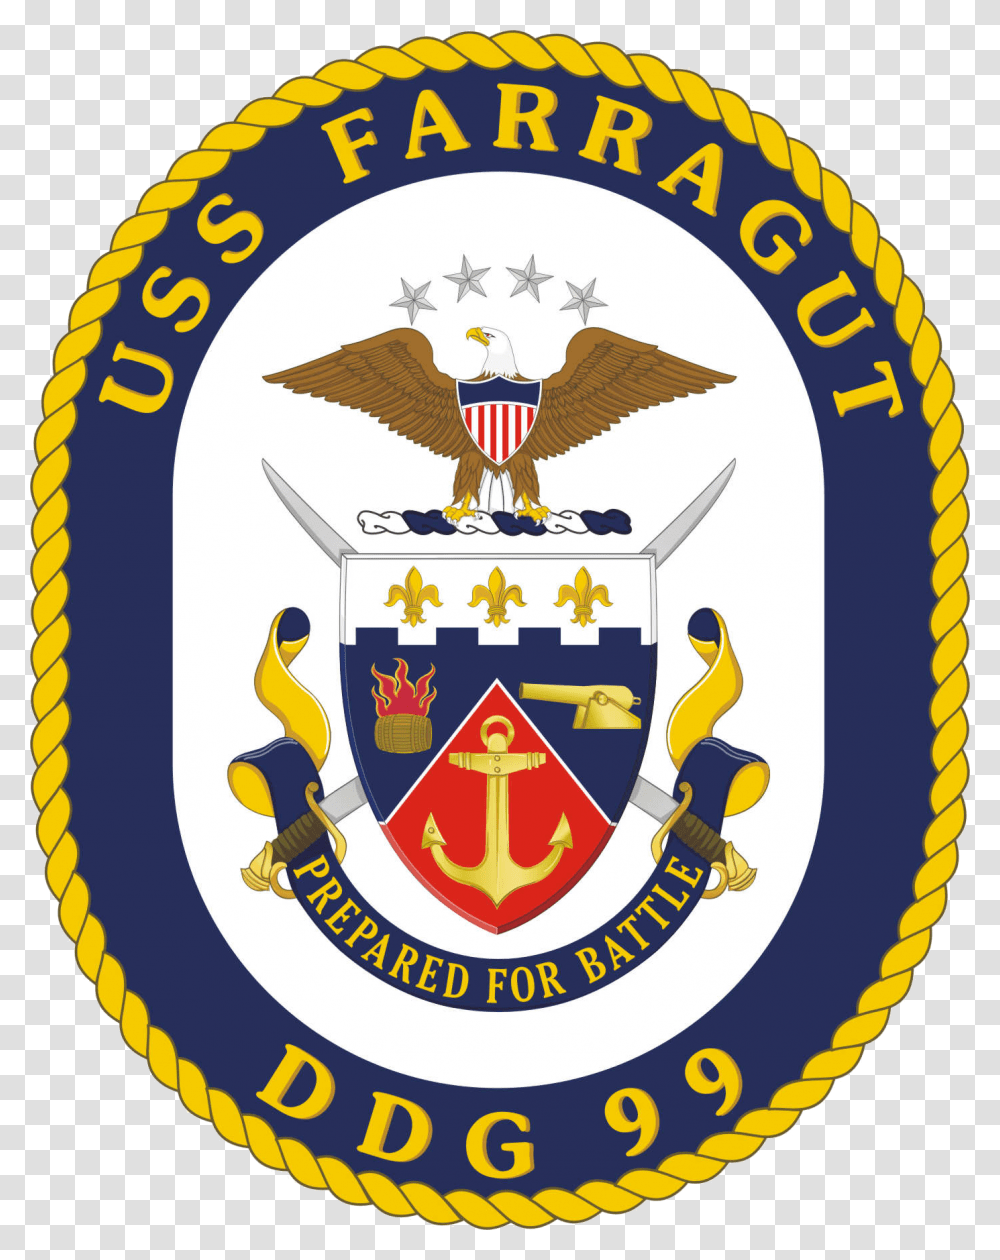 Uss Farragut Ddg 99 Crest Navy Military Military Insignia Uss Bainbridge Ddg 96 Crest, Bird, Animal, Logo Transparent Png